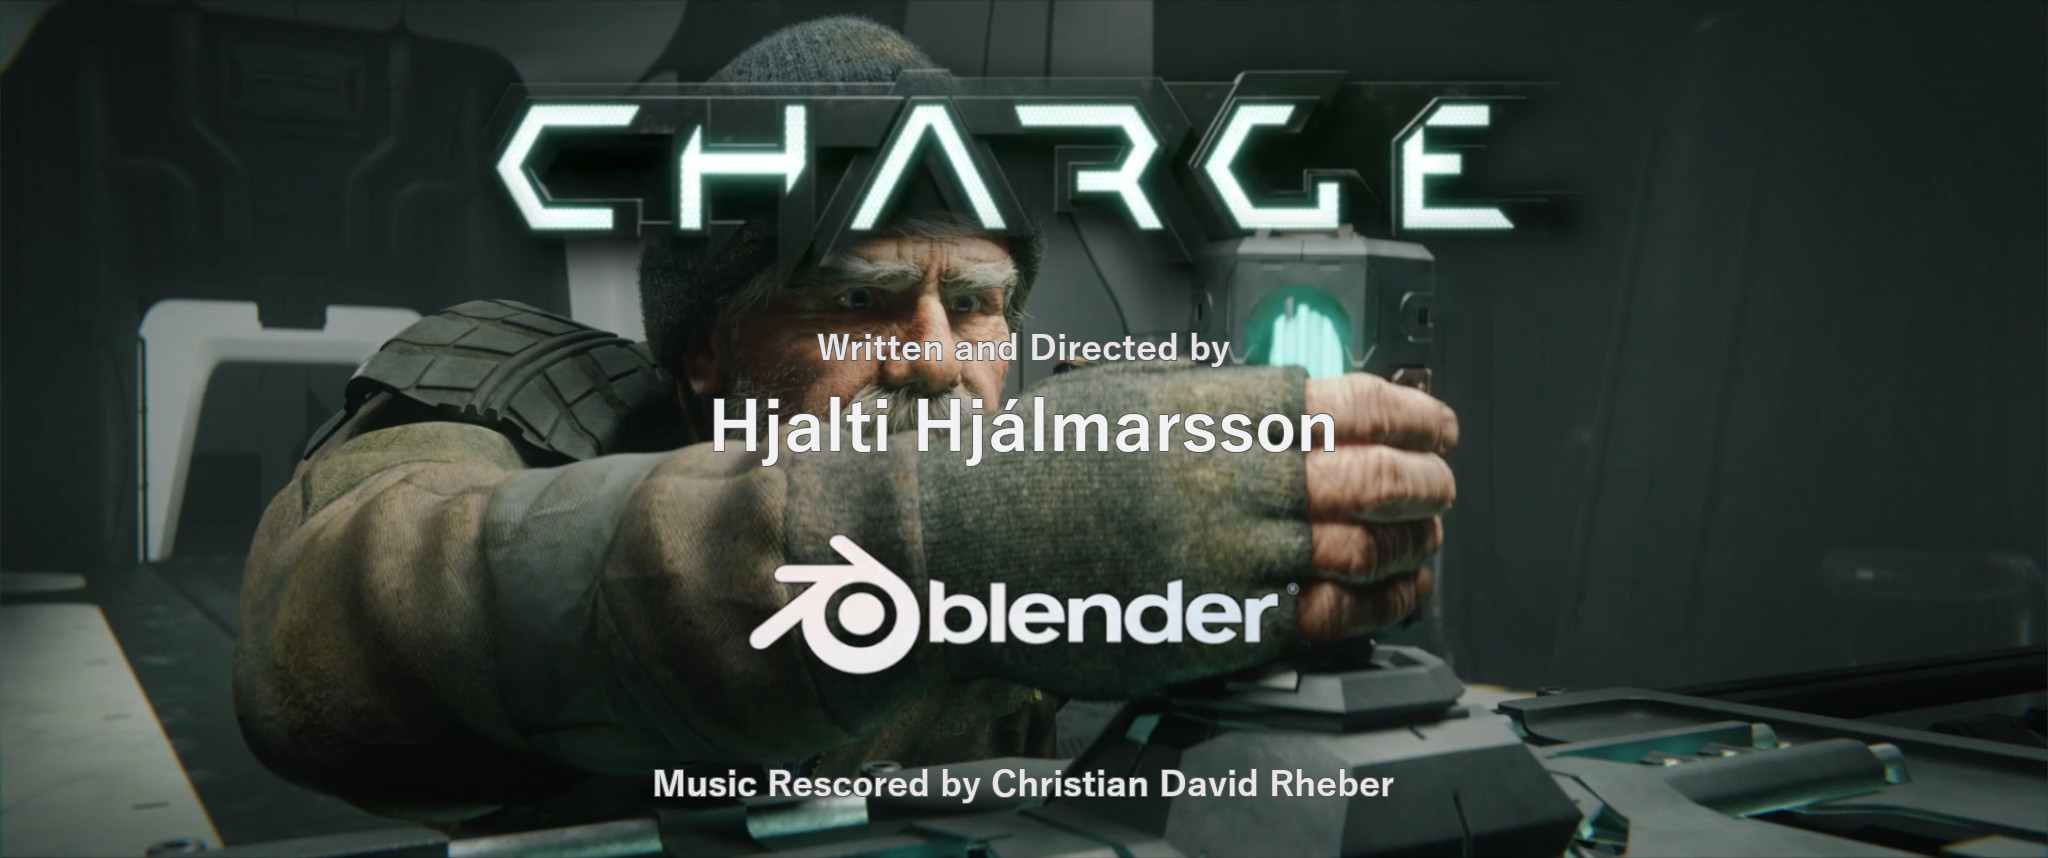 CHARGE | Rescored by Christian David Rheber - Filmkomponist, Komponist für Filmmusik, Filmmusik komponieren lassen